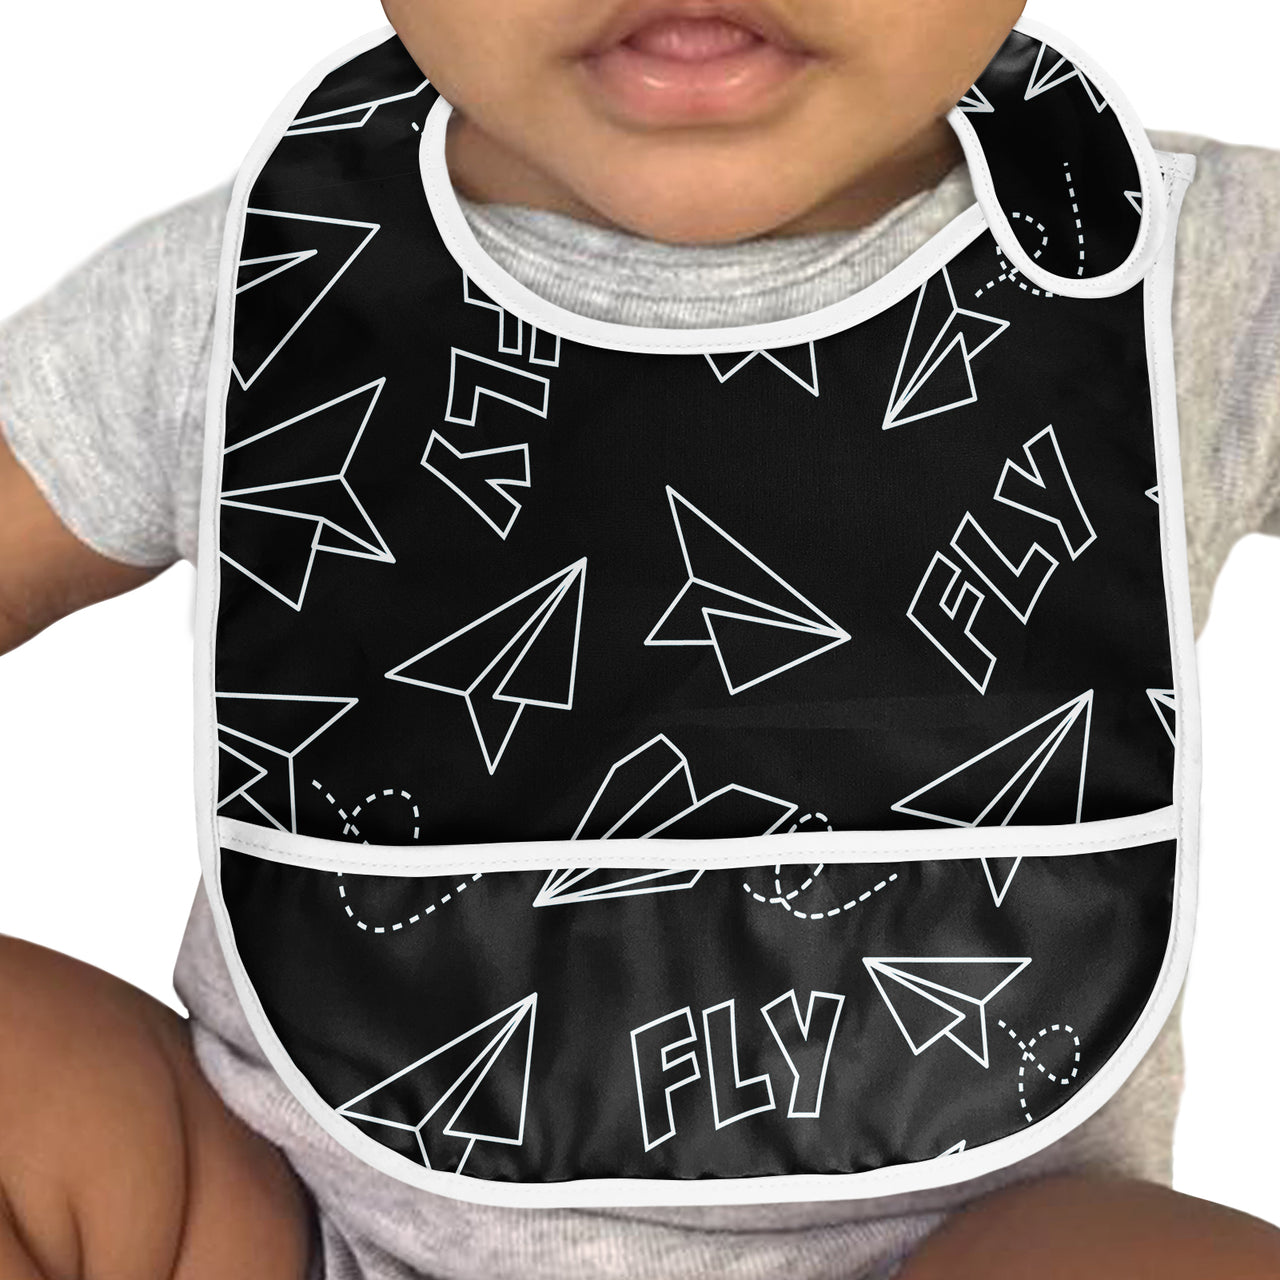 Paper Airplane & Fly Black Designed Baby Bib